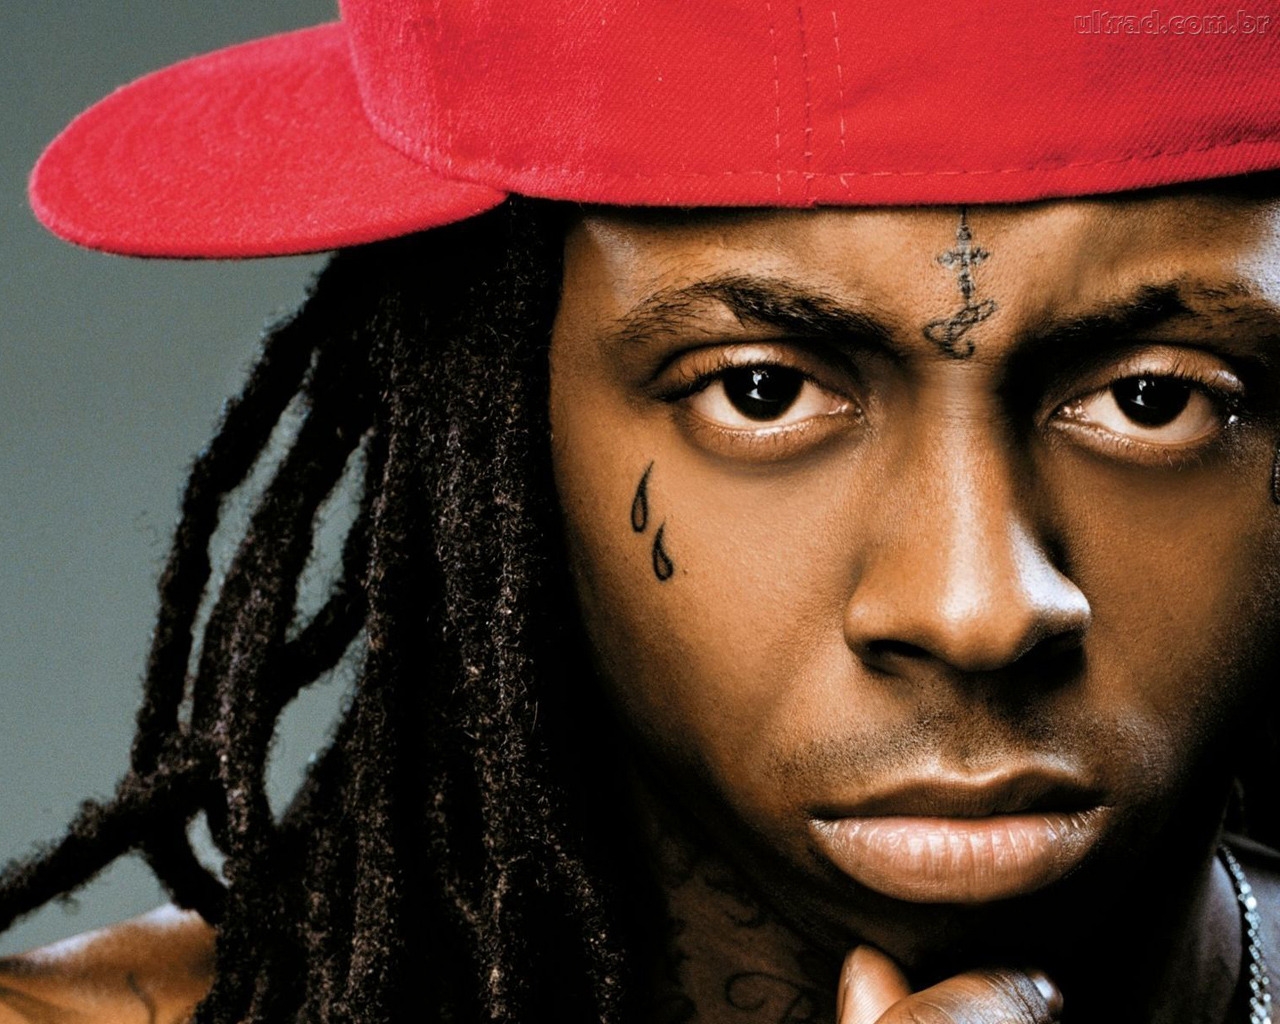 Lil Wayne for 1280 x 1024 resolution